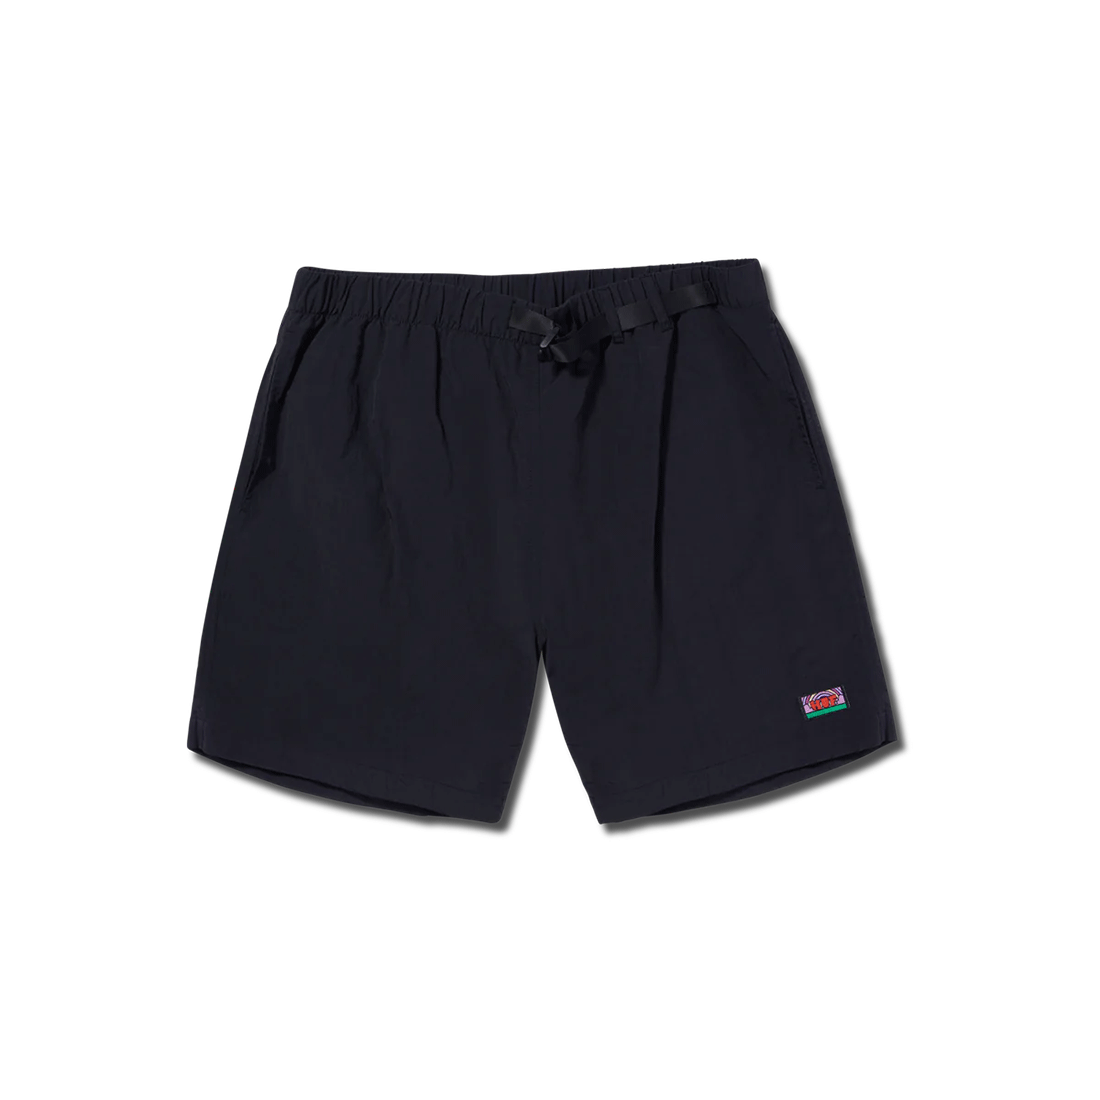 Huf men's shorts - New Day Packable Tech Short-Black